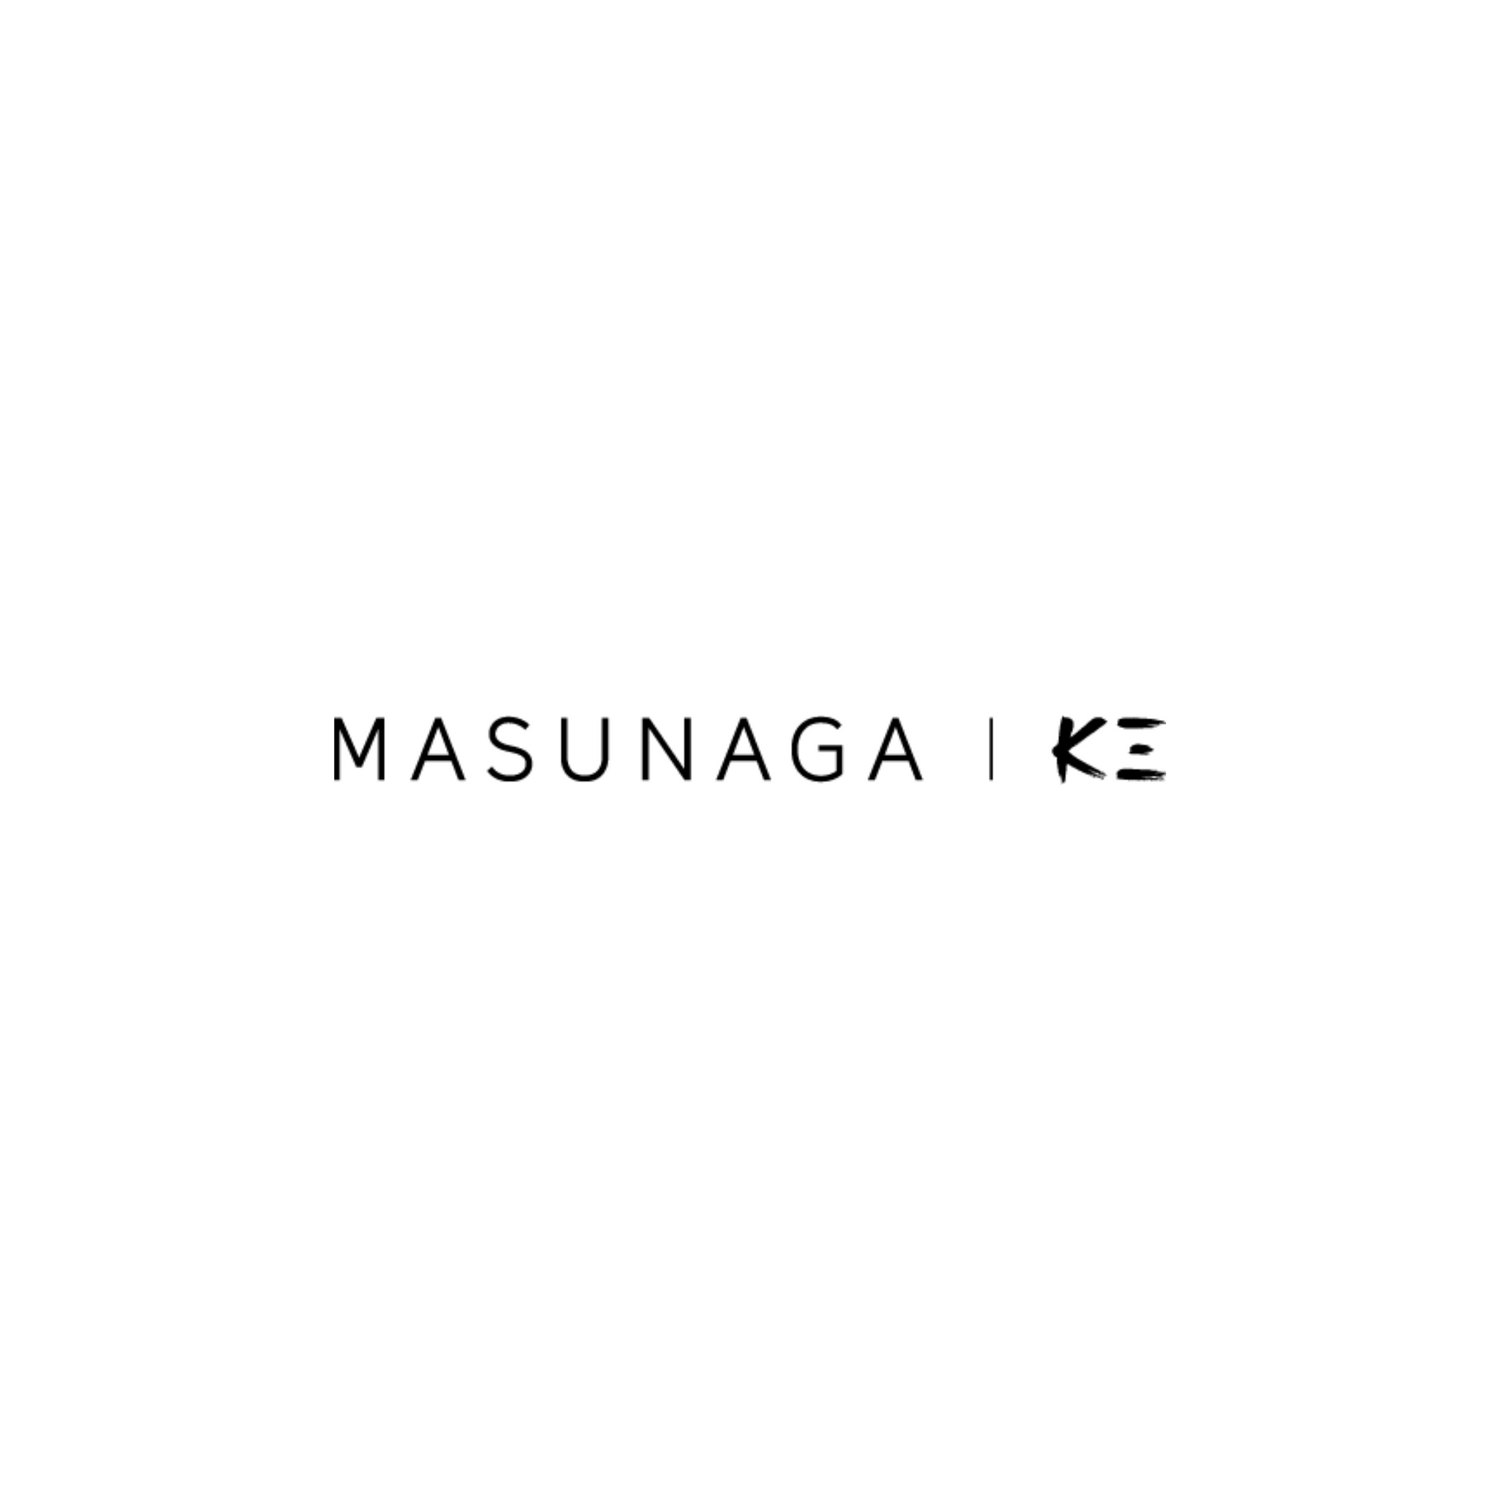 Masunaga by Kenzo Takada